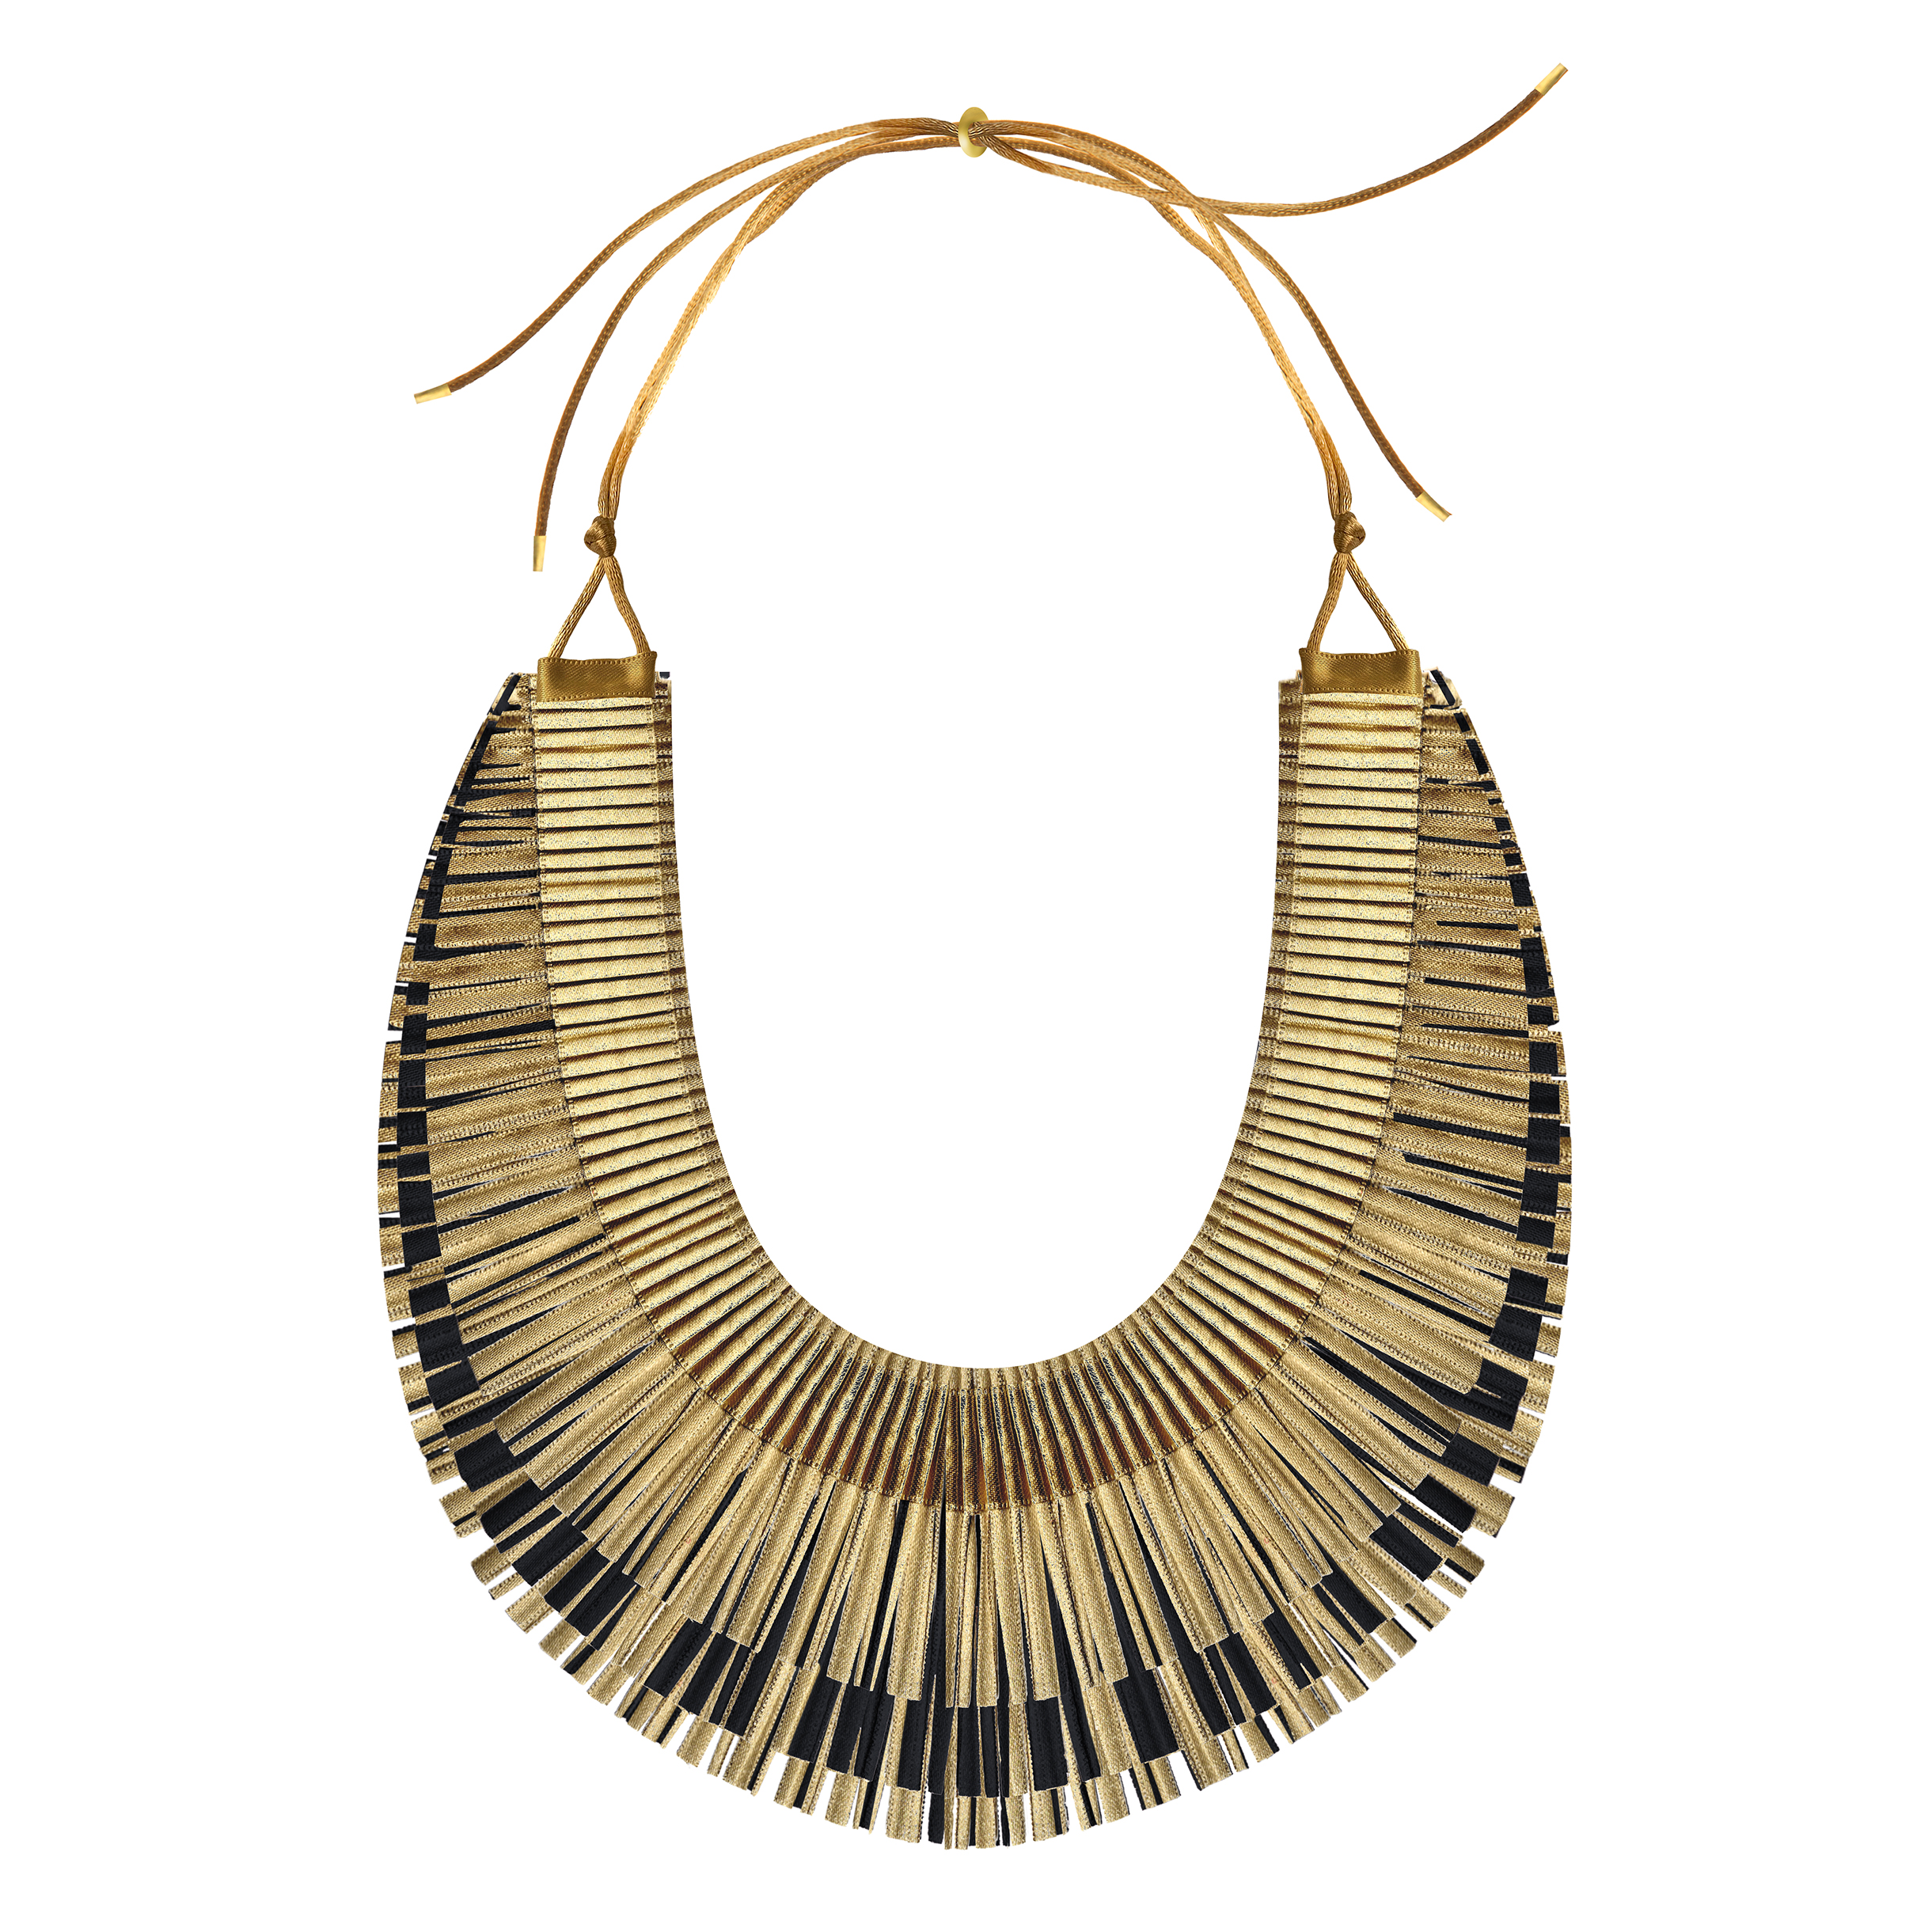 Triple gold pleat necklace by Alexandra Tsoukala